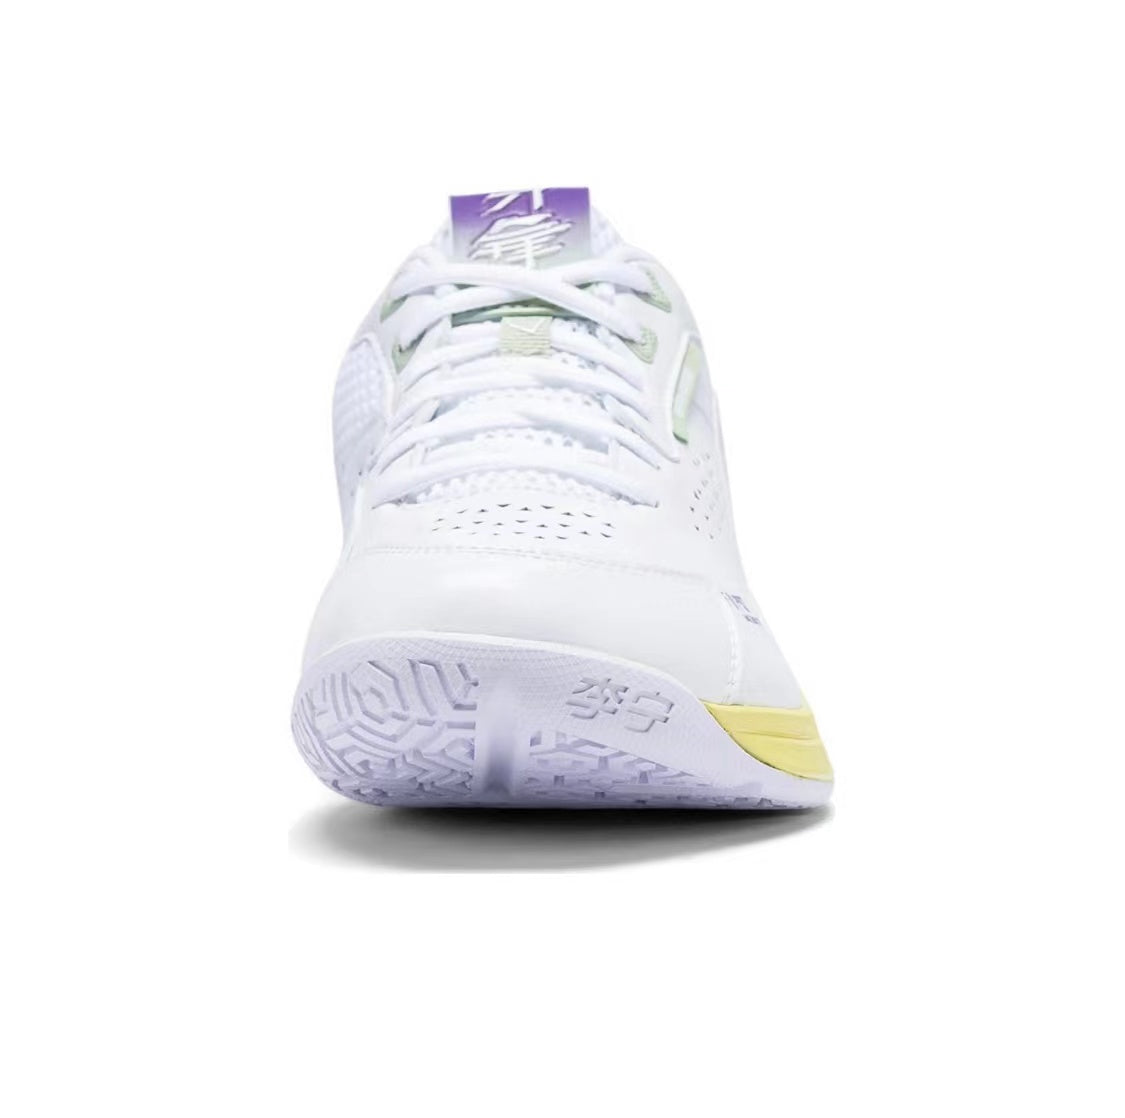 Blade DF-01 Pro | Li-Ning Badminton Shoes - White/Purple